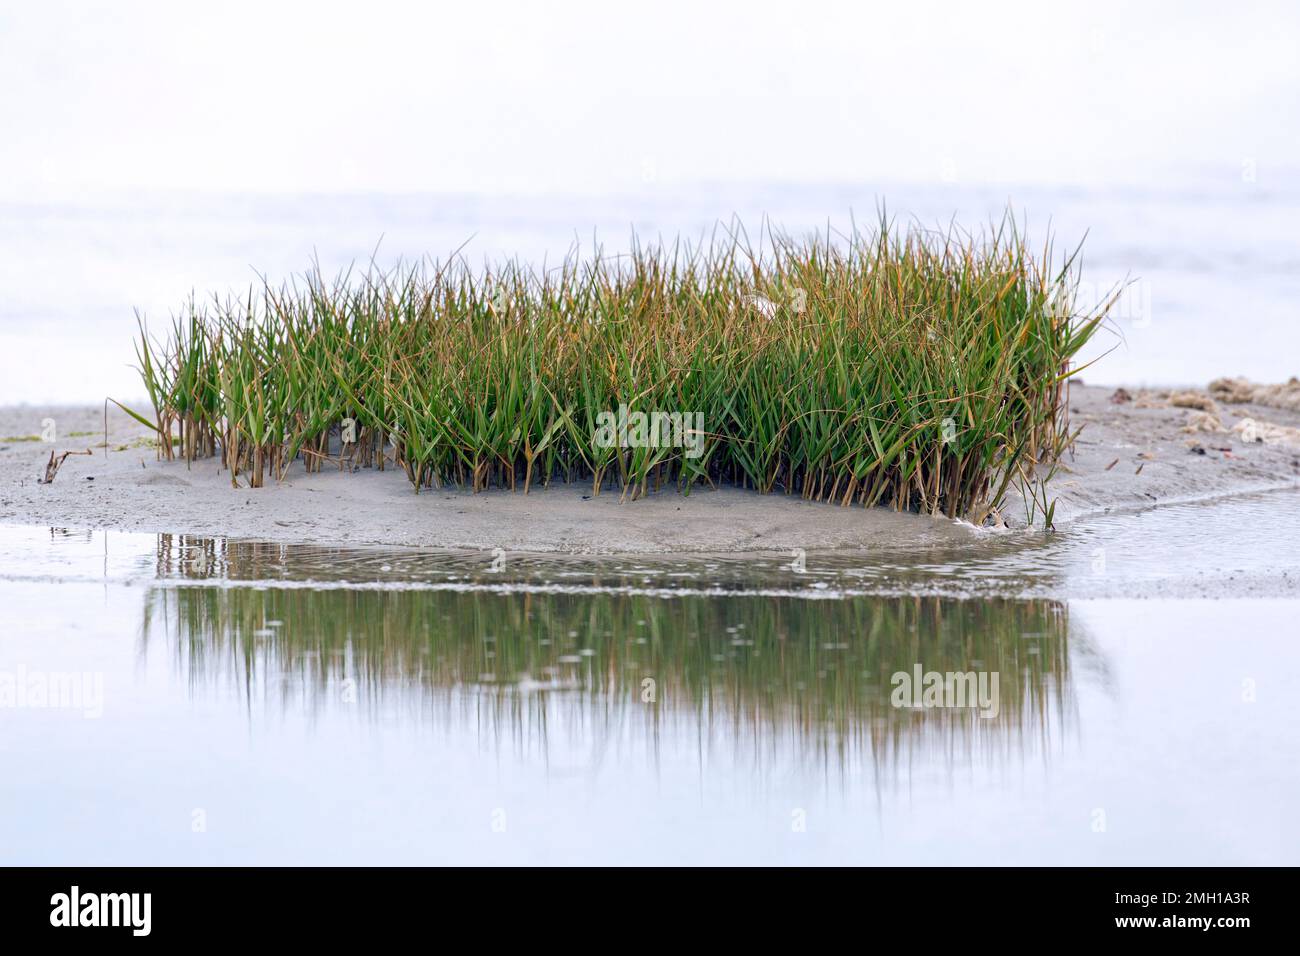 Common cordgrass / English cord-grass (Sporobolus anglicus / Spartina anglica), herbaceous perennial plant growing in coastal salt marsh / saltmarsh Stock Photo